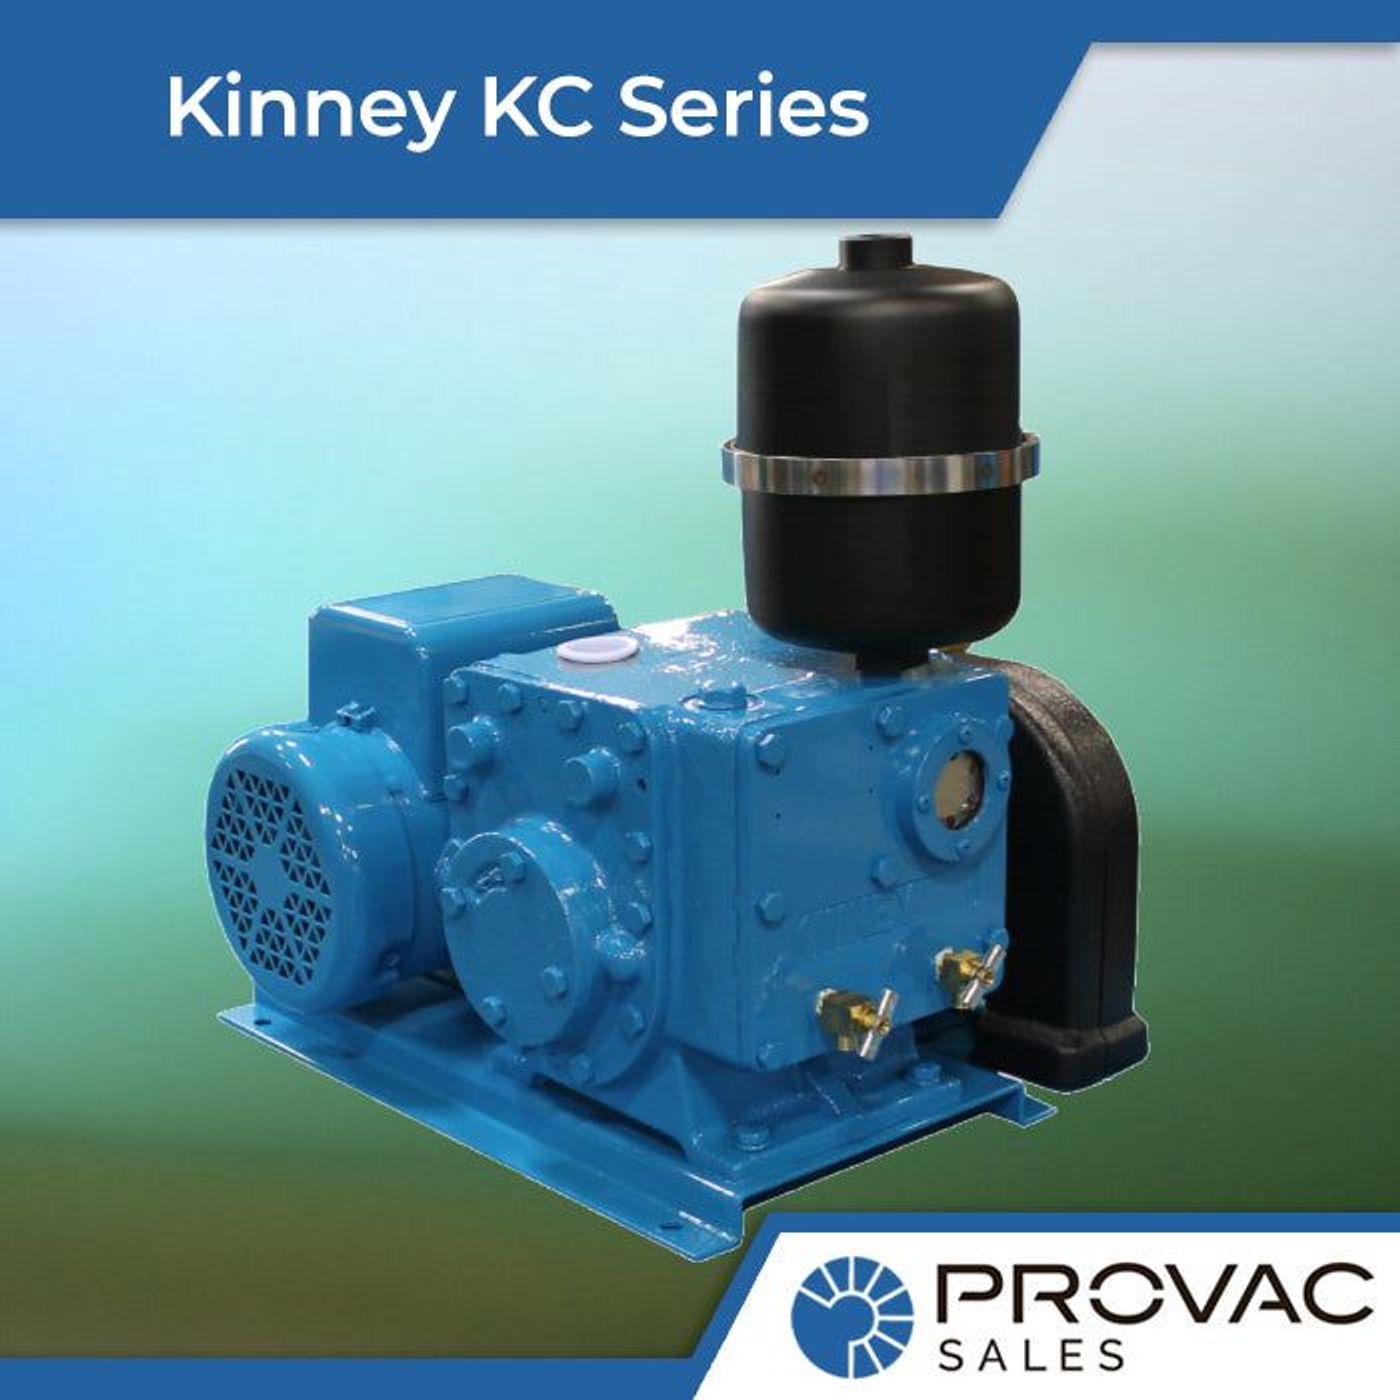 Product Spotlight: Kinney KC Series